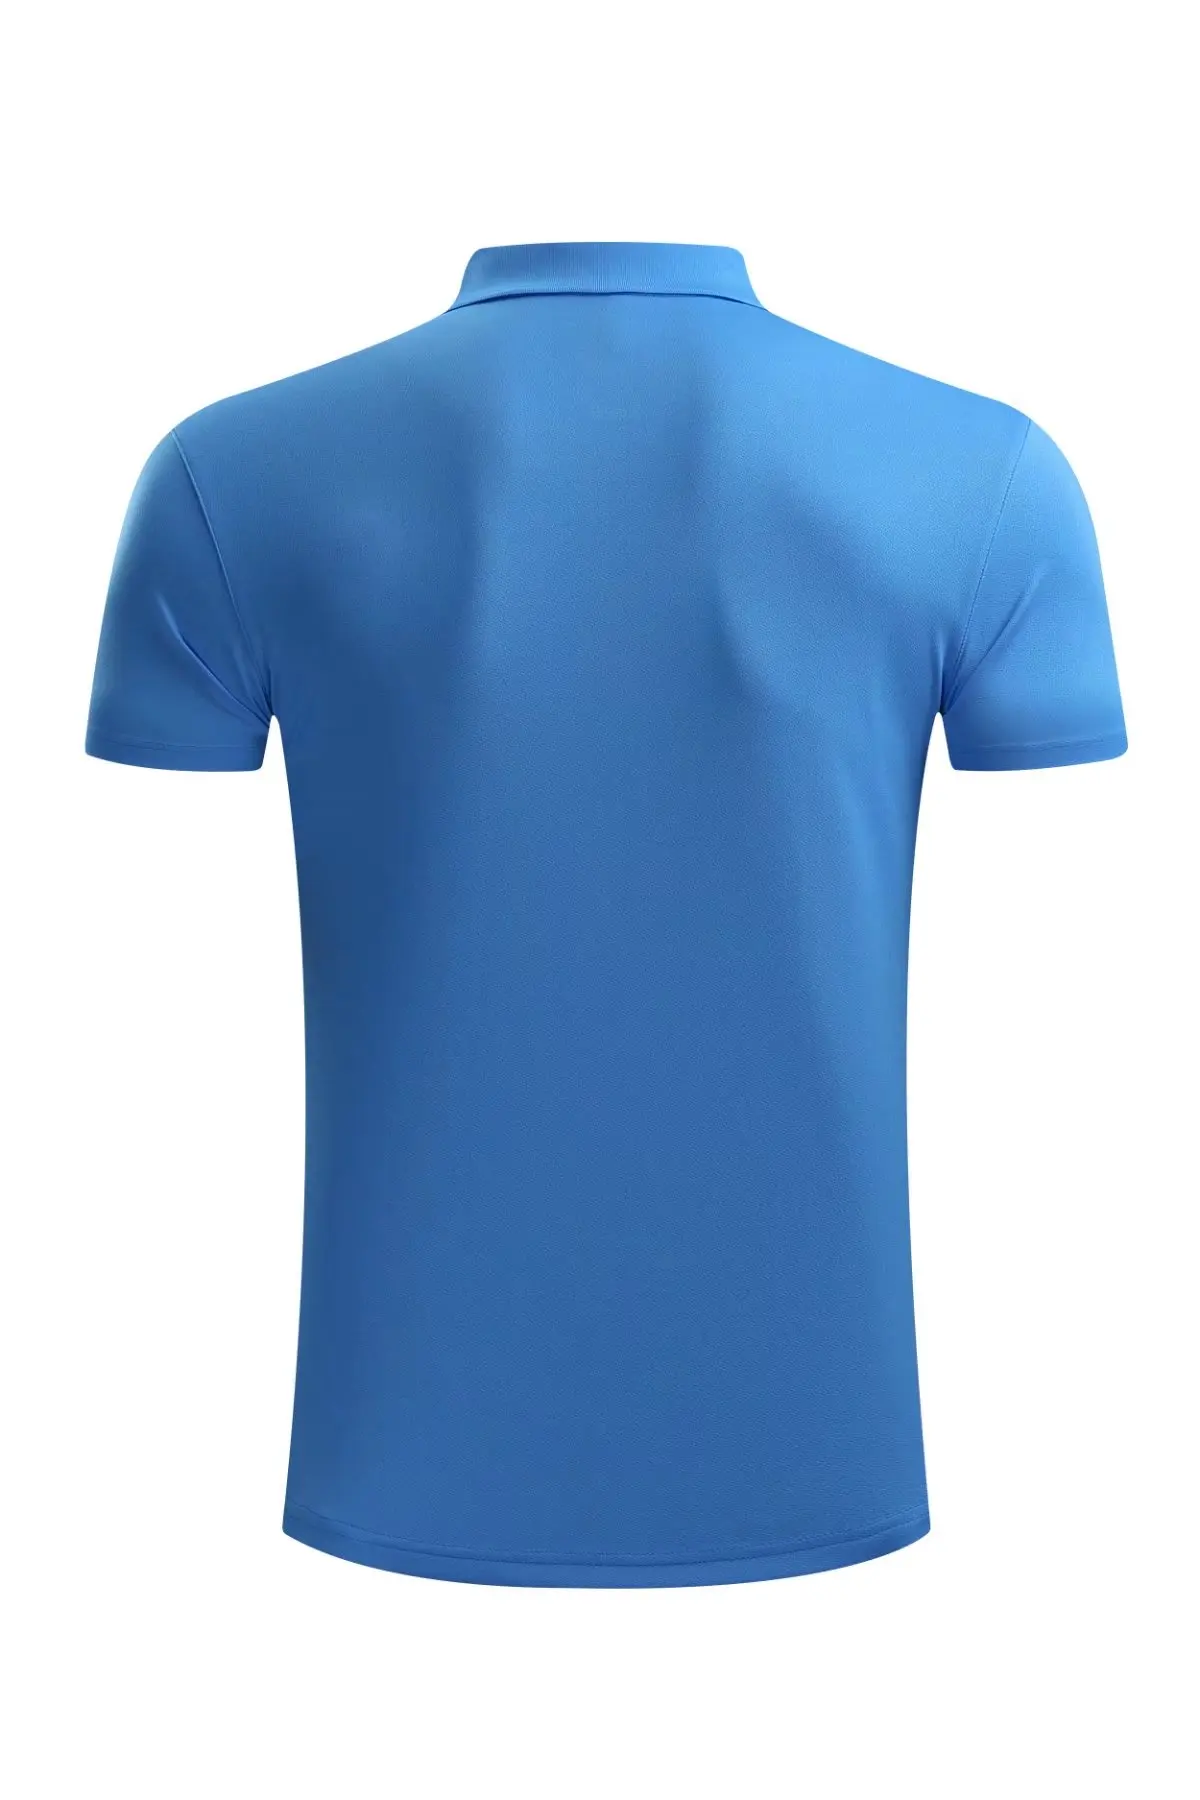 Professional team game custom Quick dry Badminton shirt Men/Women, Tennis t-shirts,sports golf Polo shirt, pingpong t-shirt